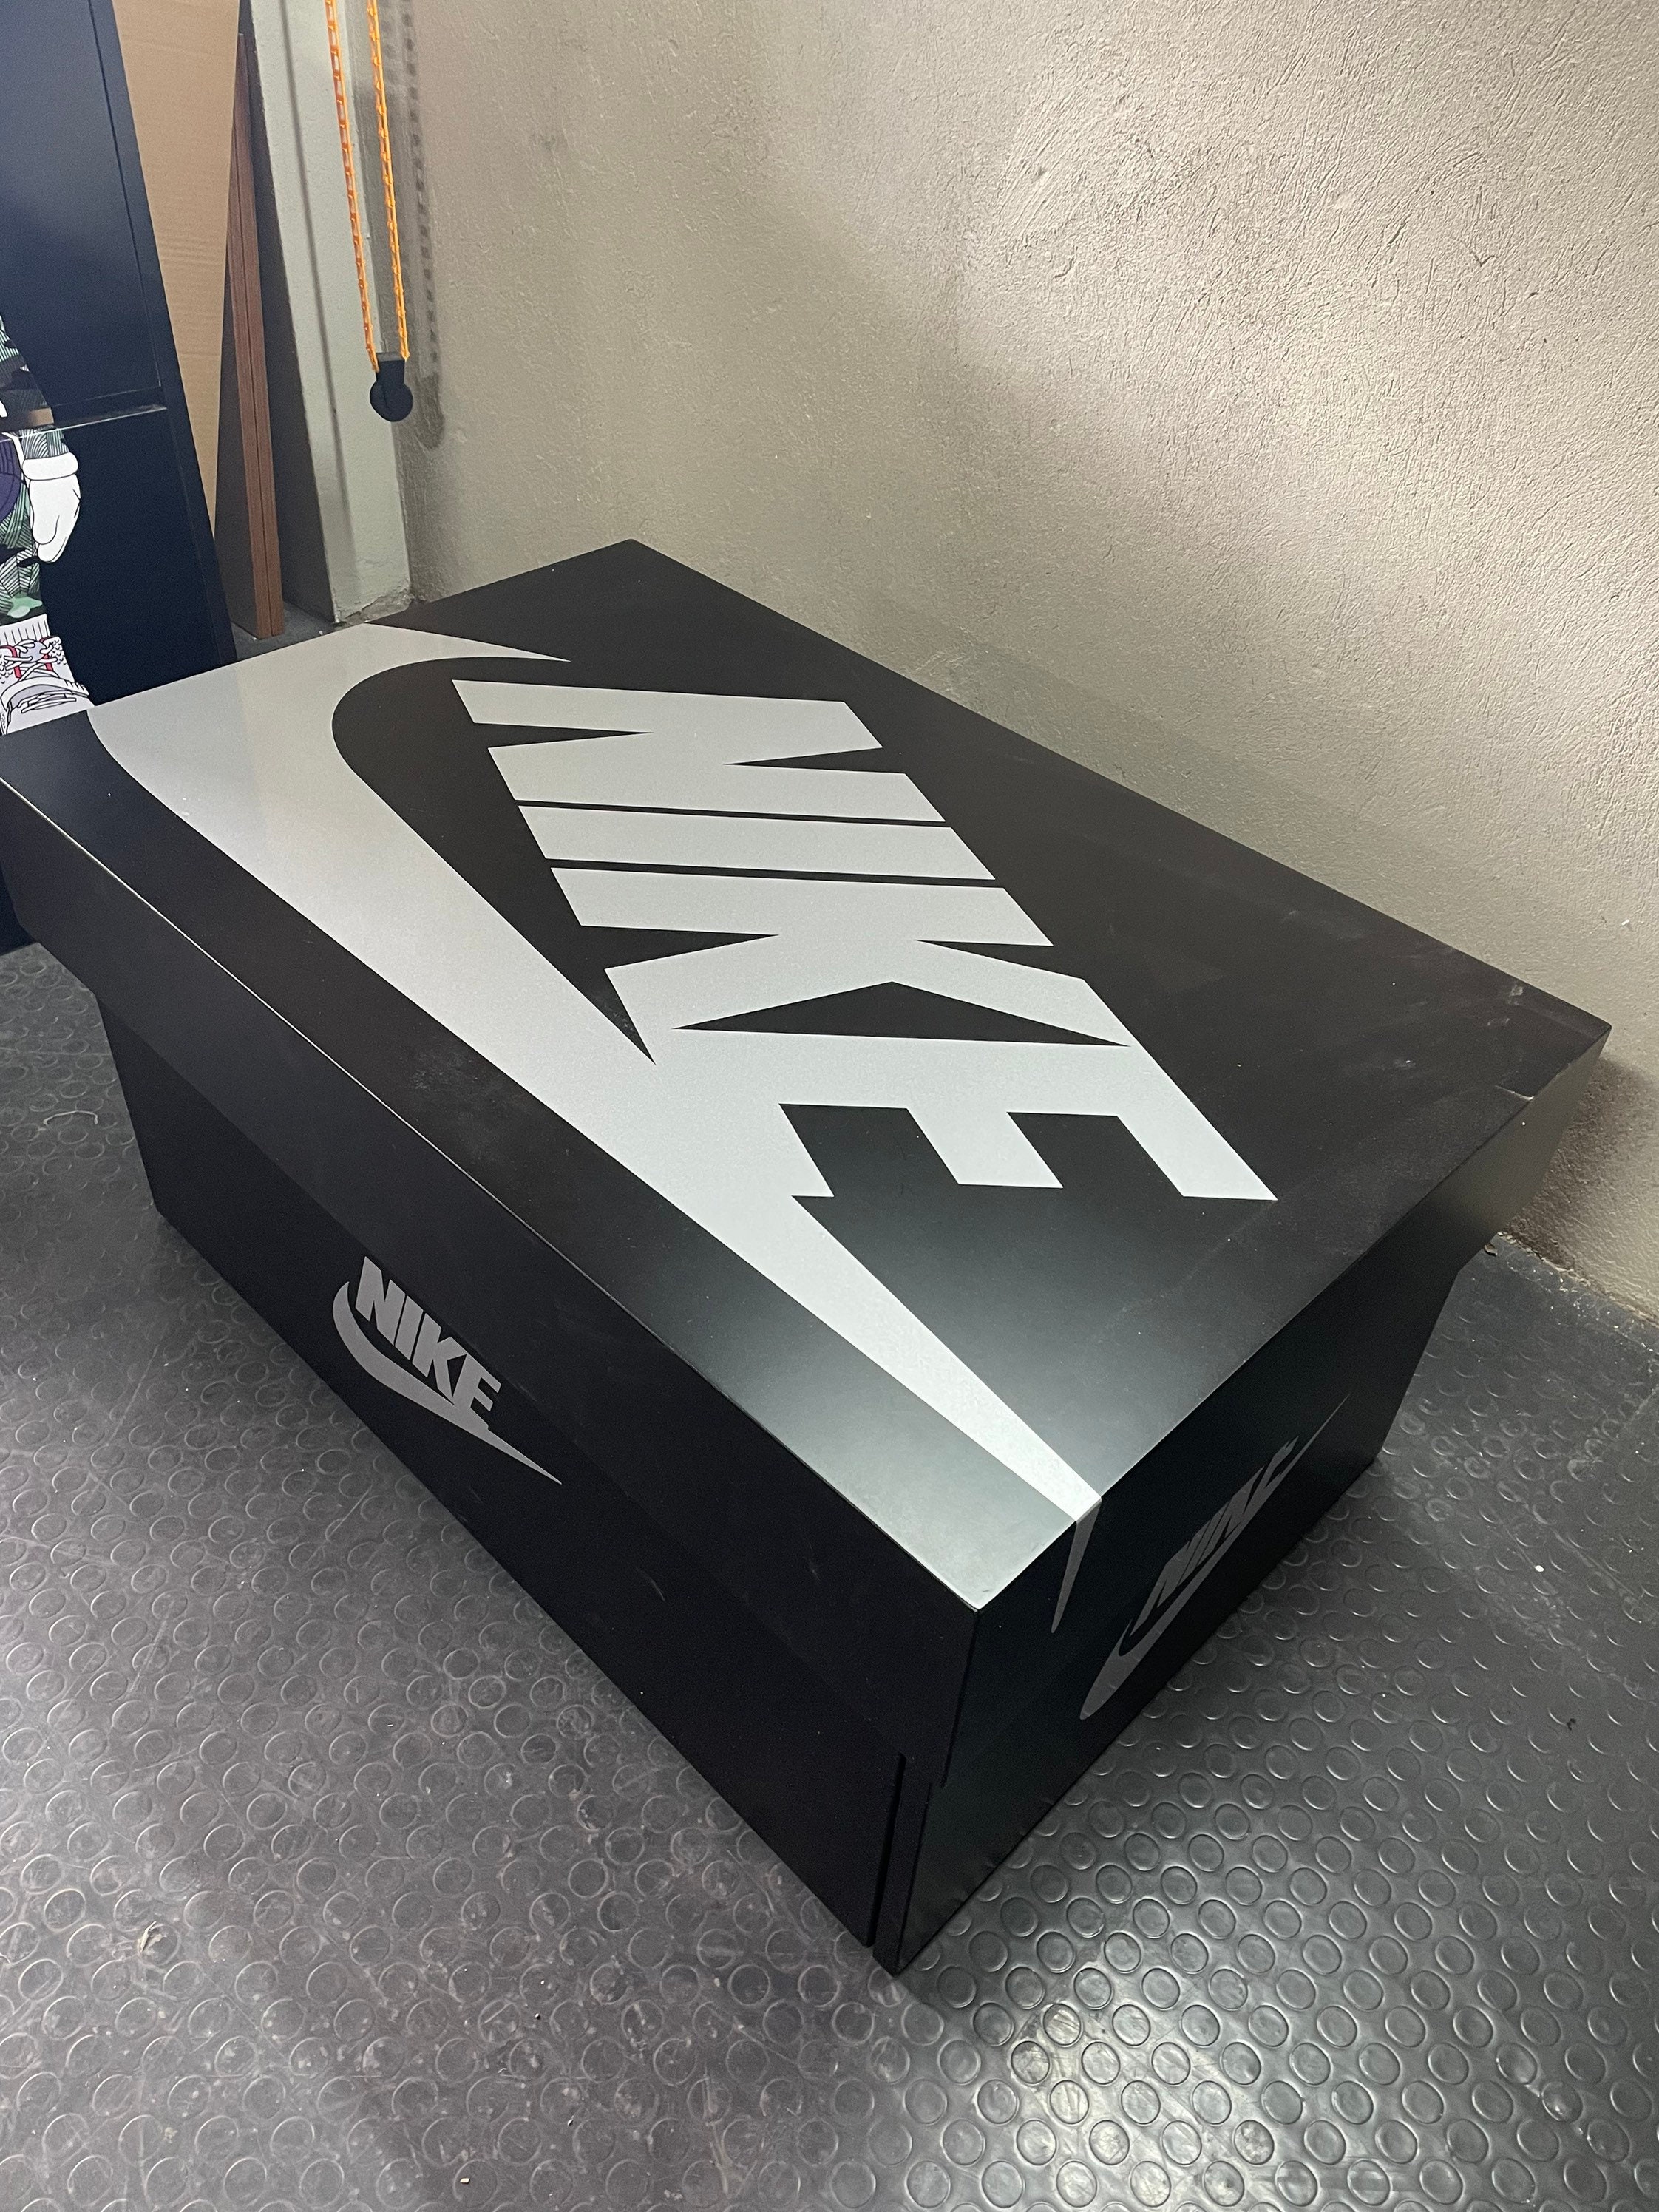 Barry Signaal Schrijf een brief Nike Print Giant Shoe Box Storage Organizer - Etsy